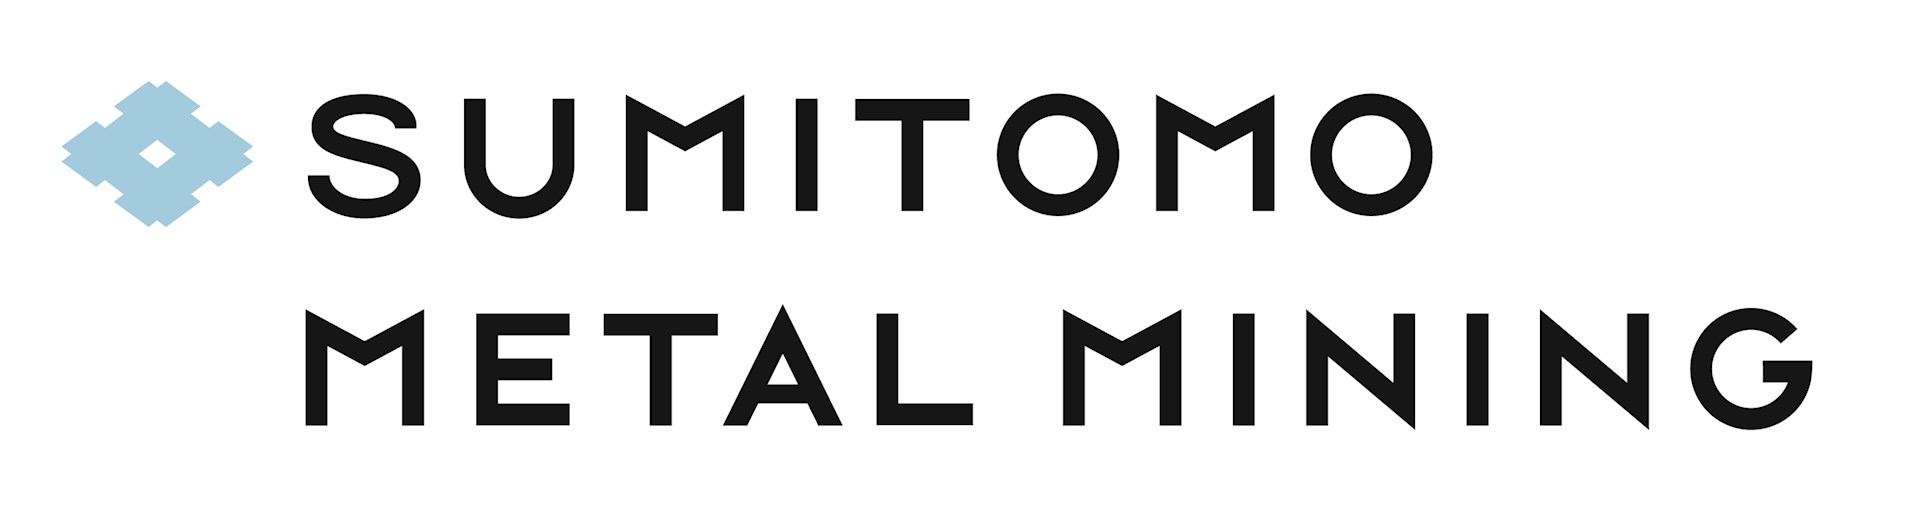 Sumitomo Metal Mining Co. Ltd